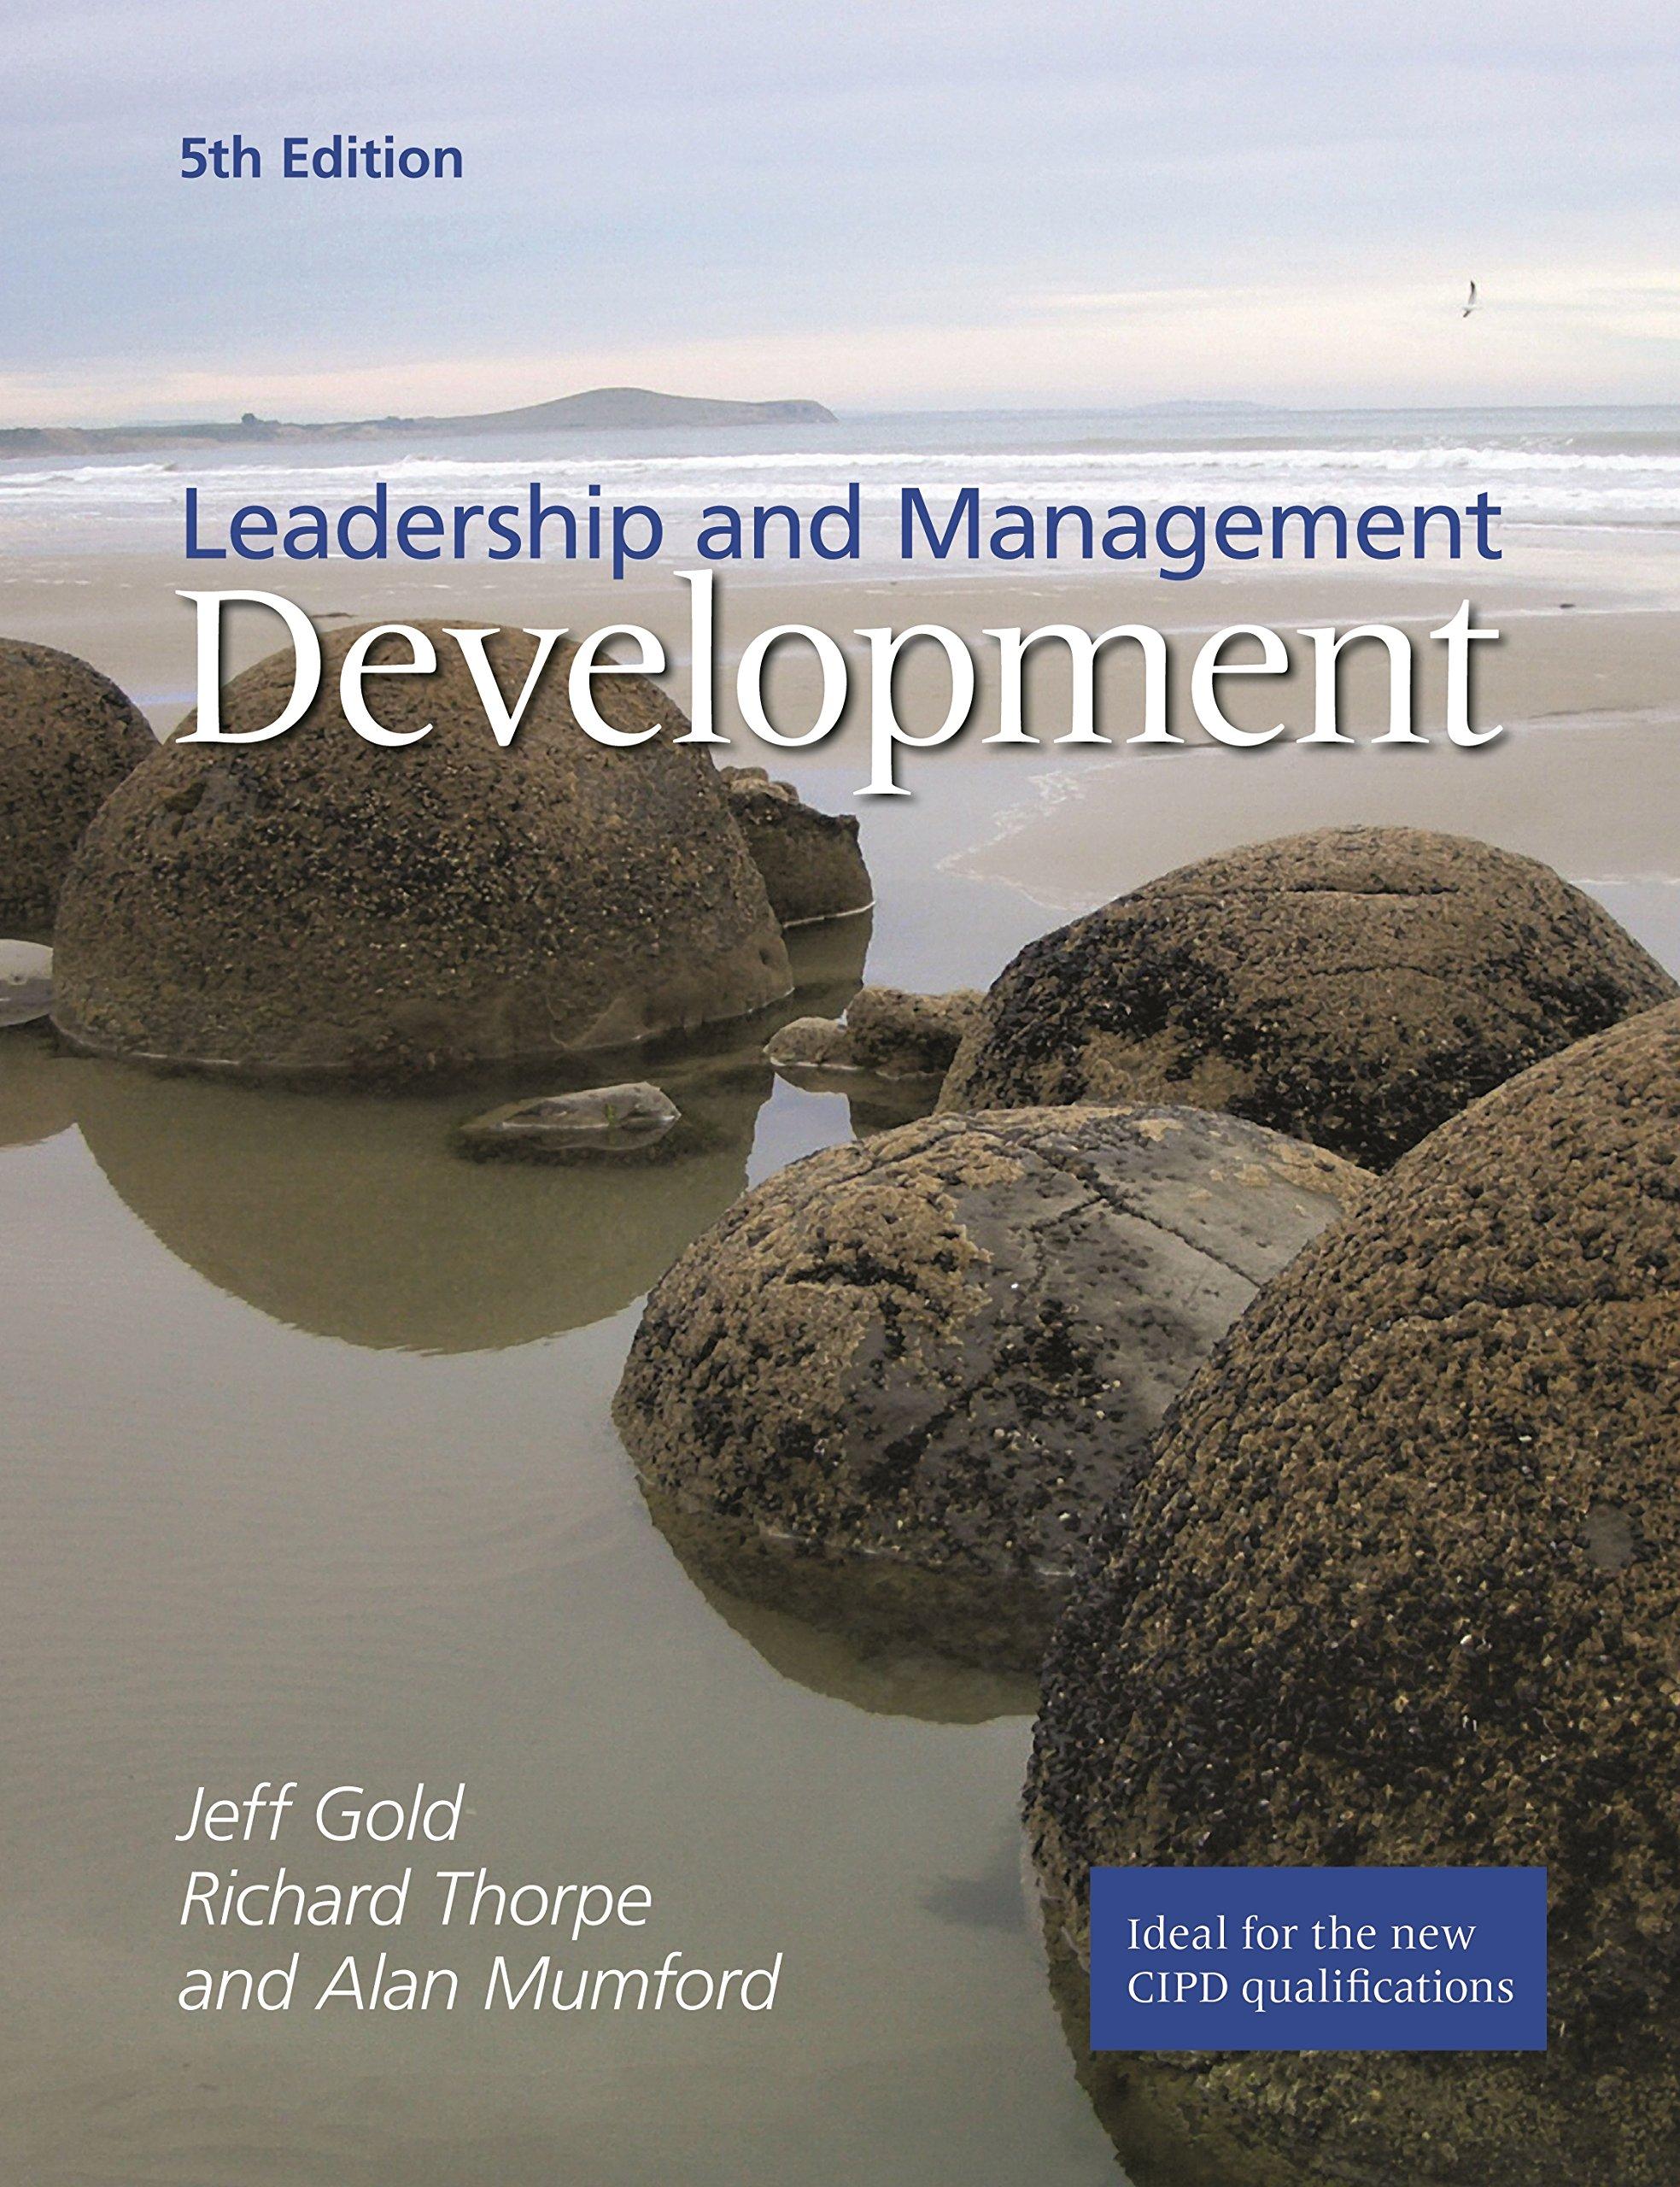 leadership and management development 5th edition jeffrey gold, richard thorpe, alan mumford 1843982447,